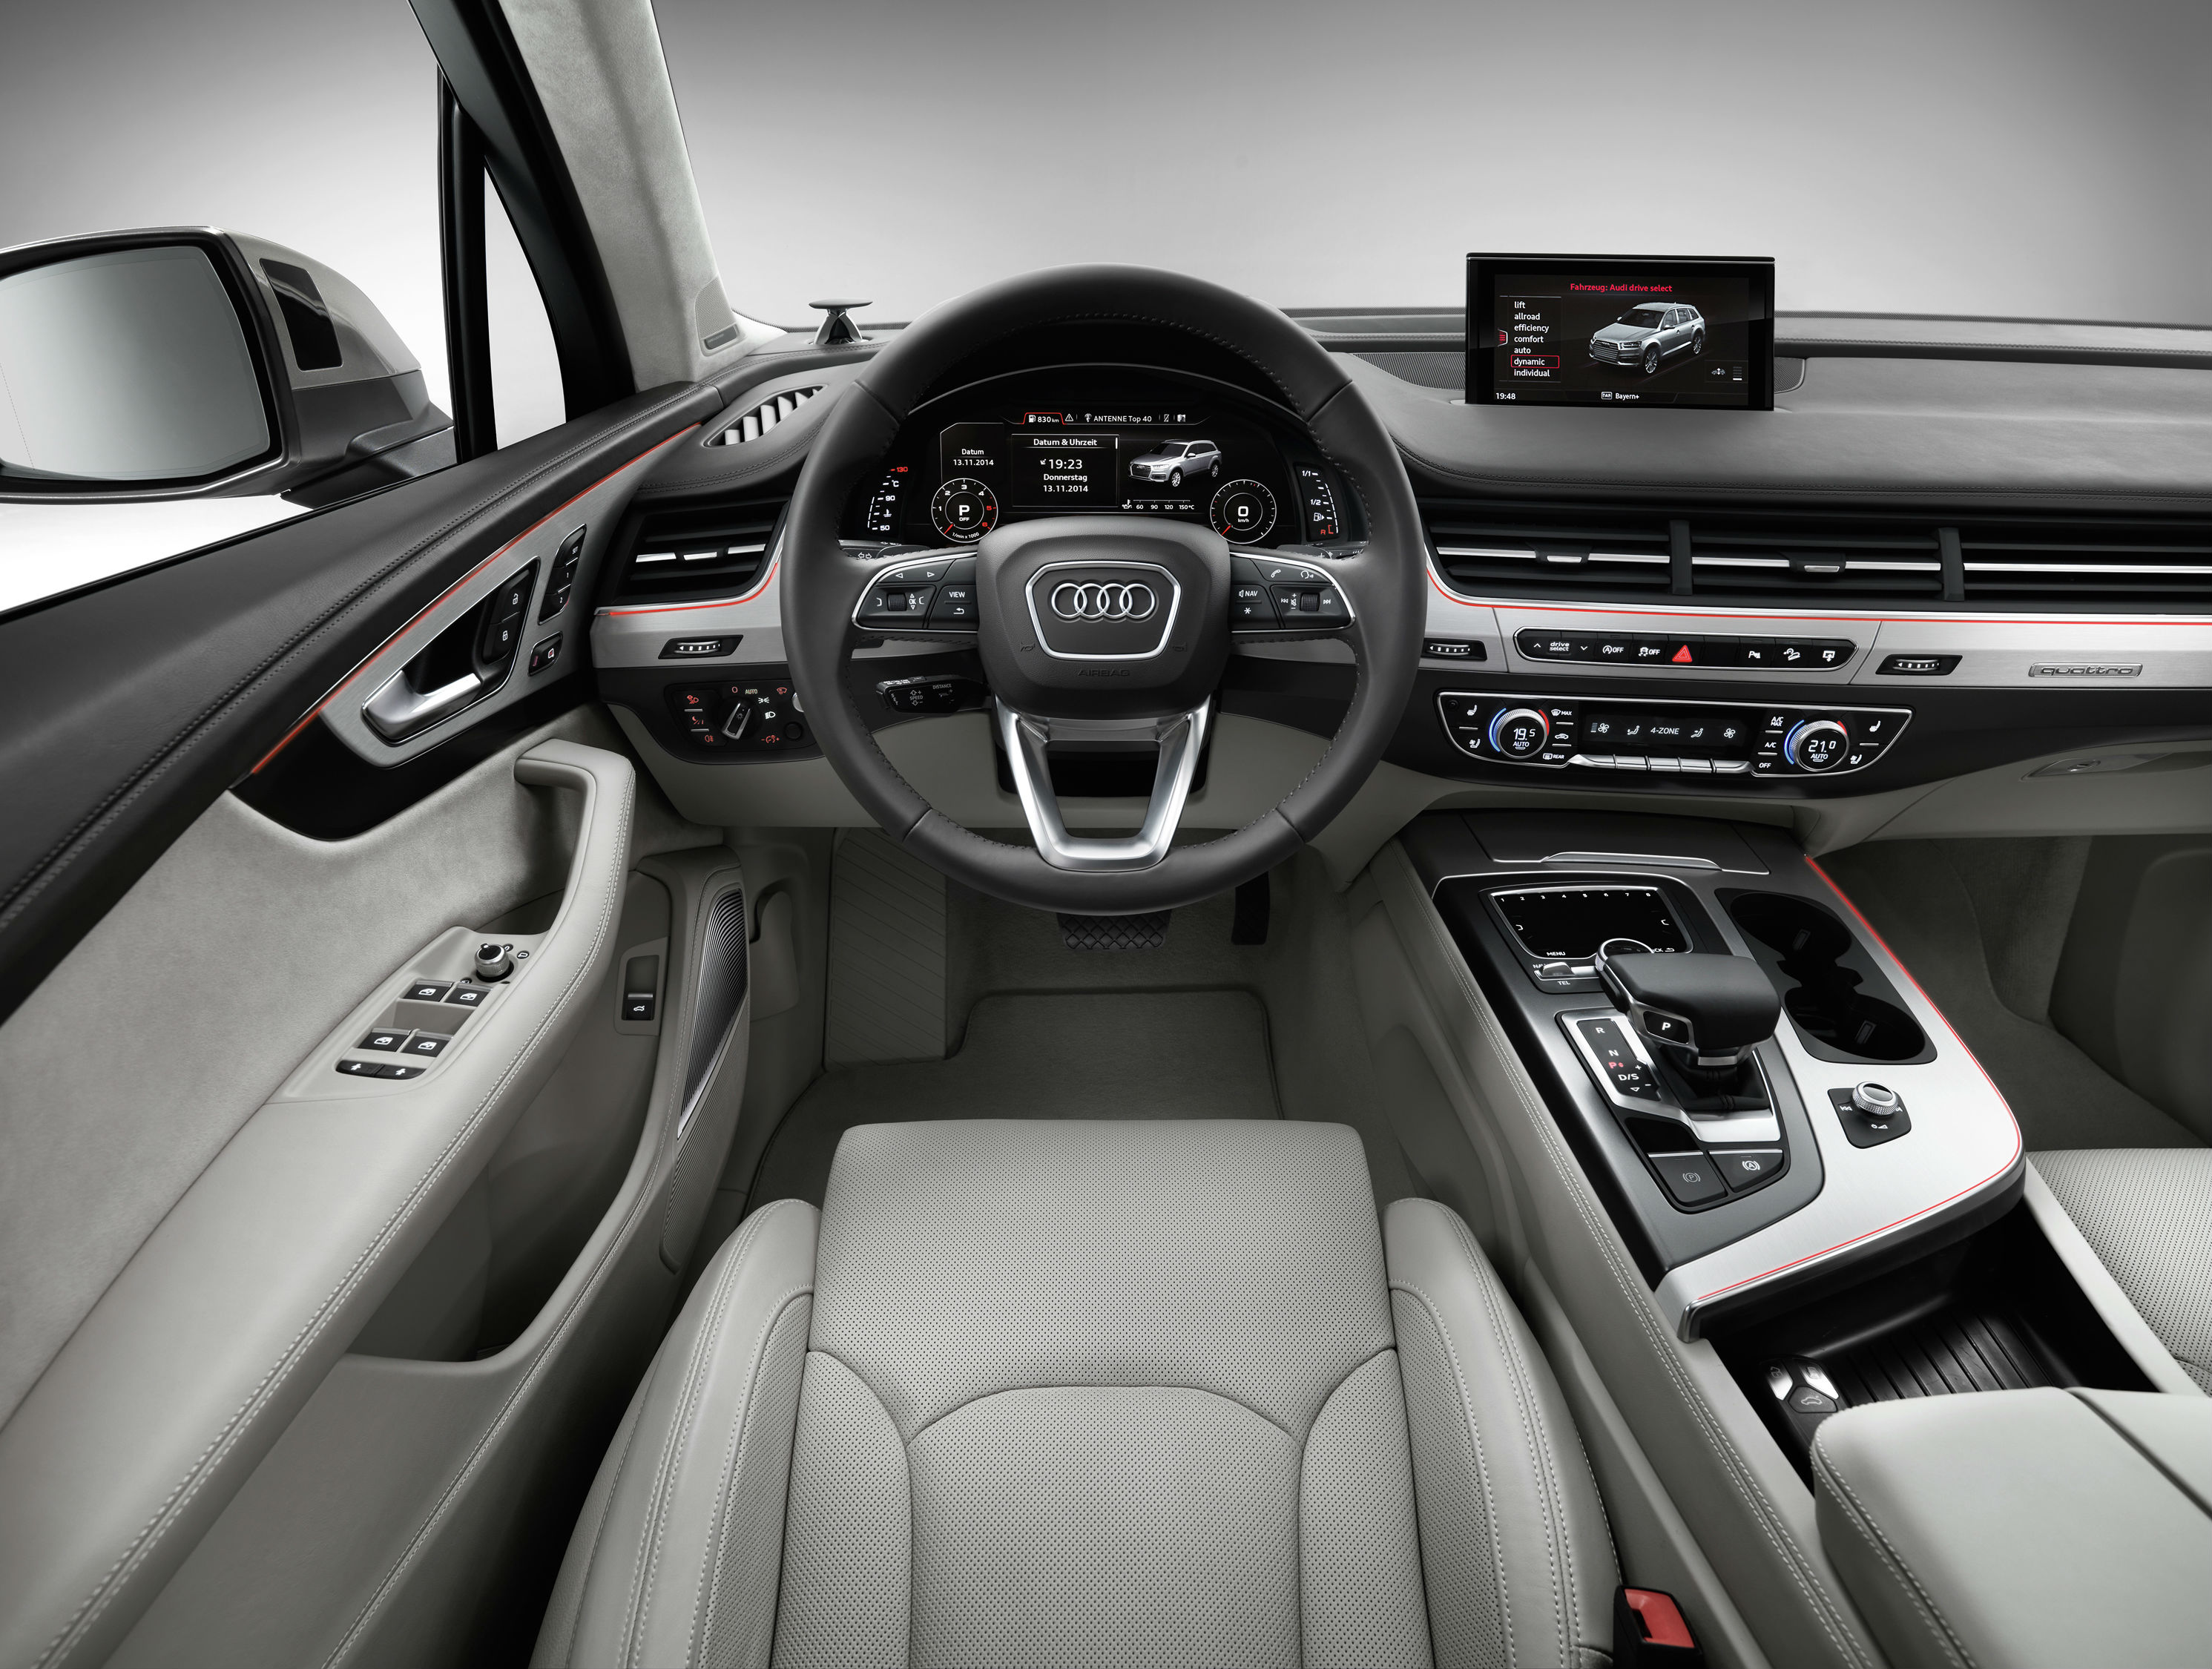 Audi Q7 2015 interior dashboard